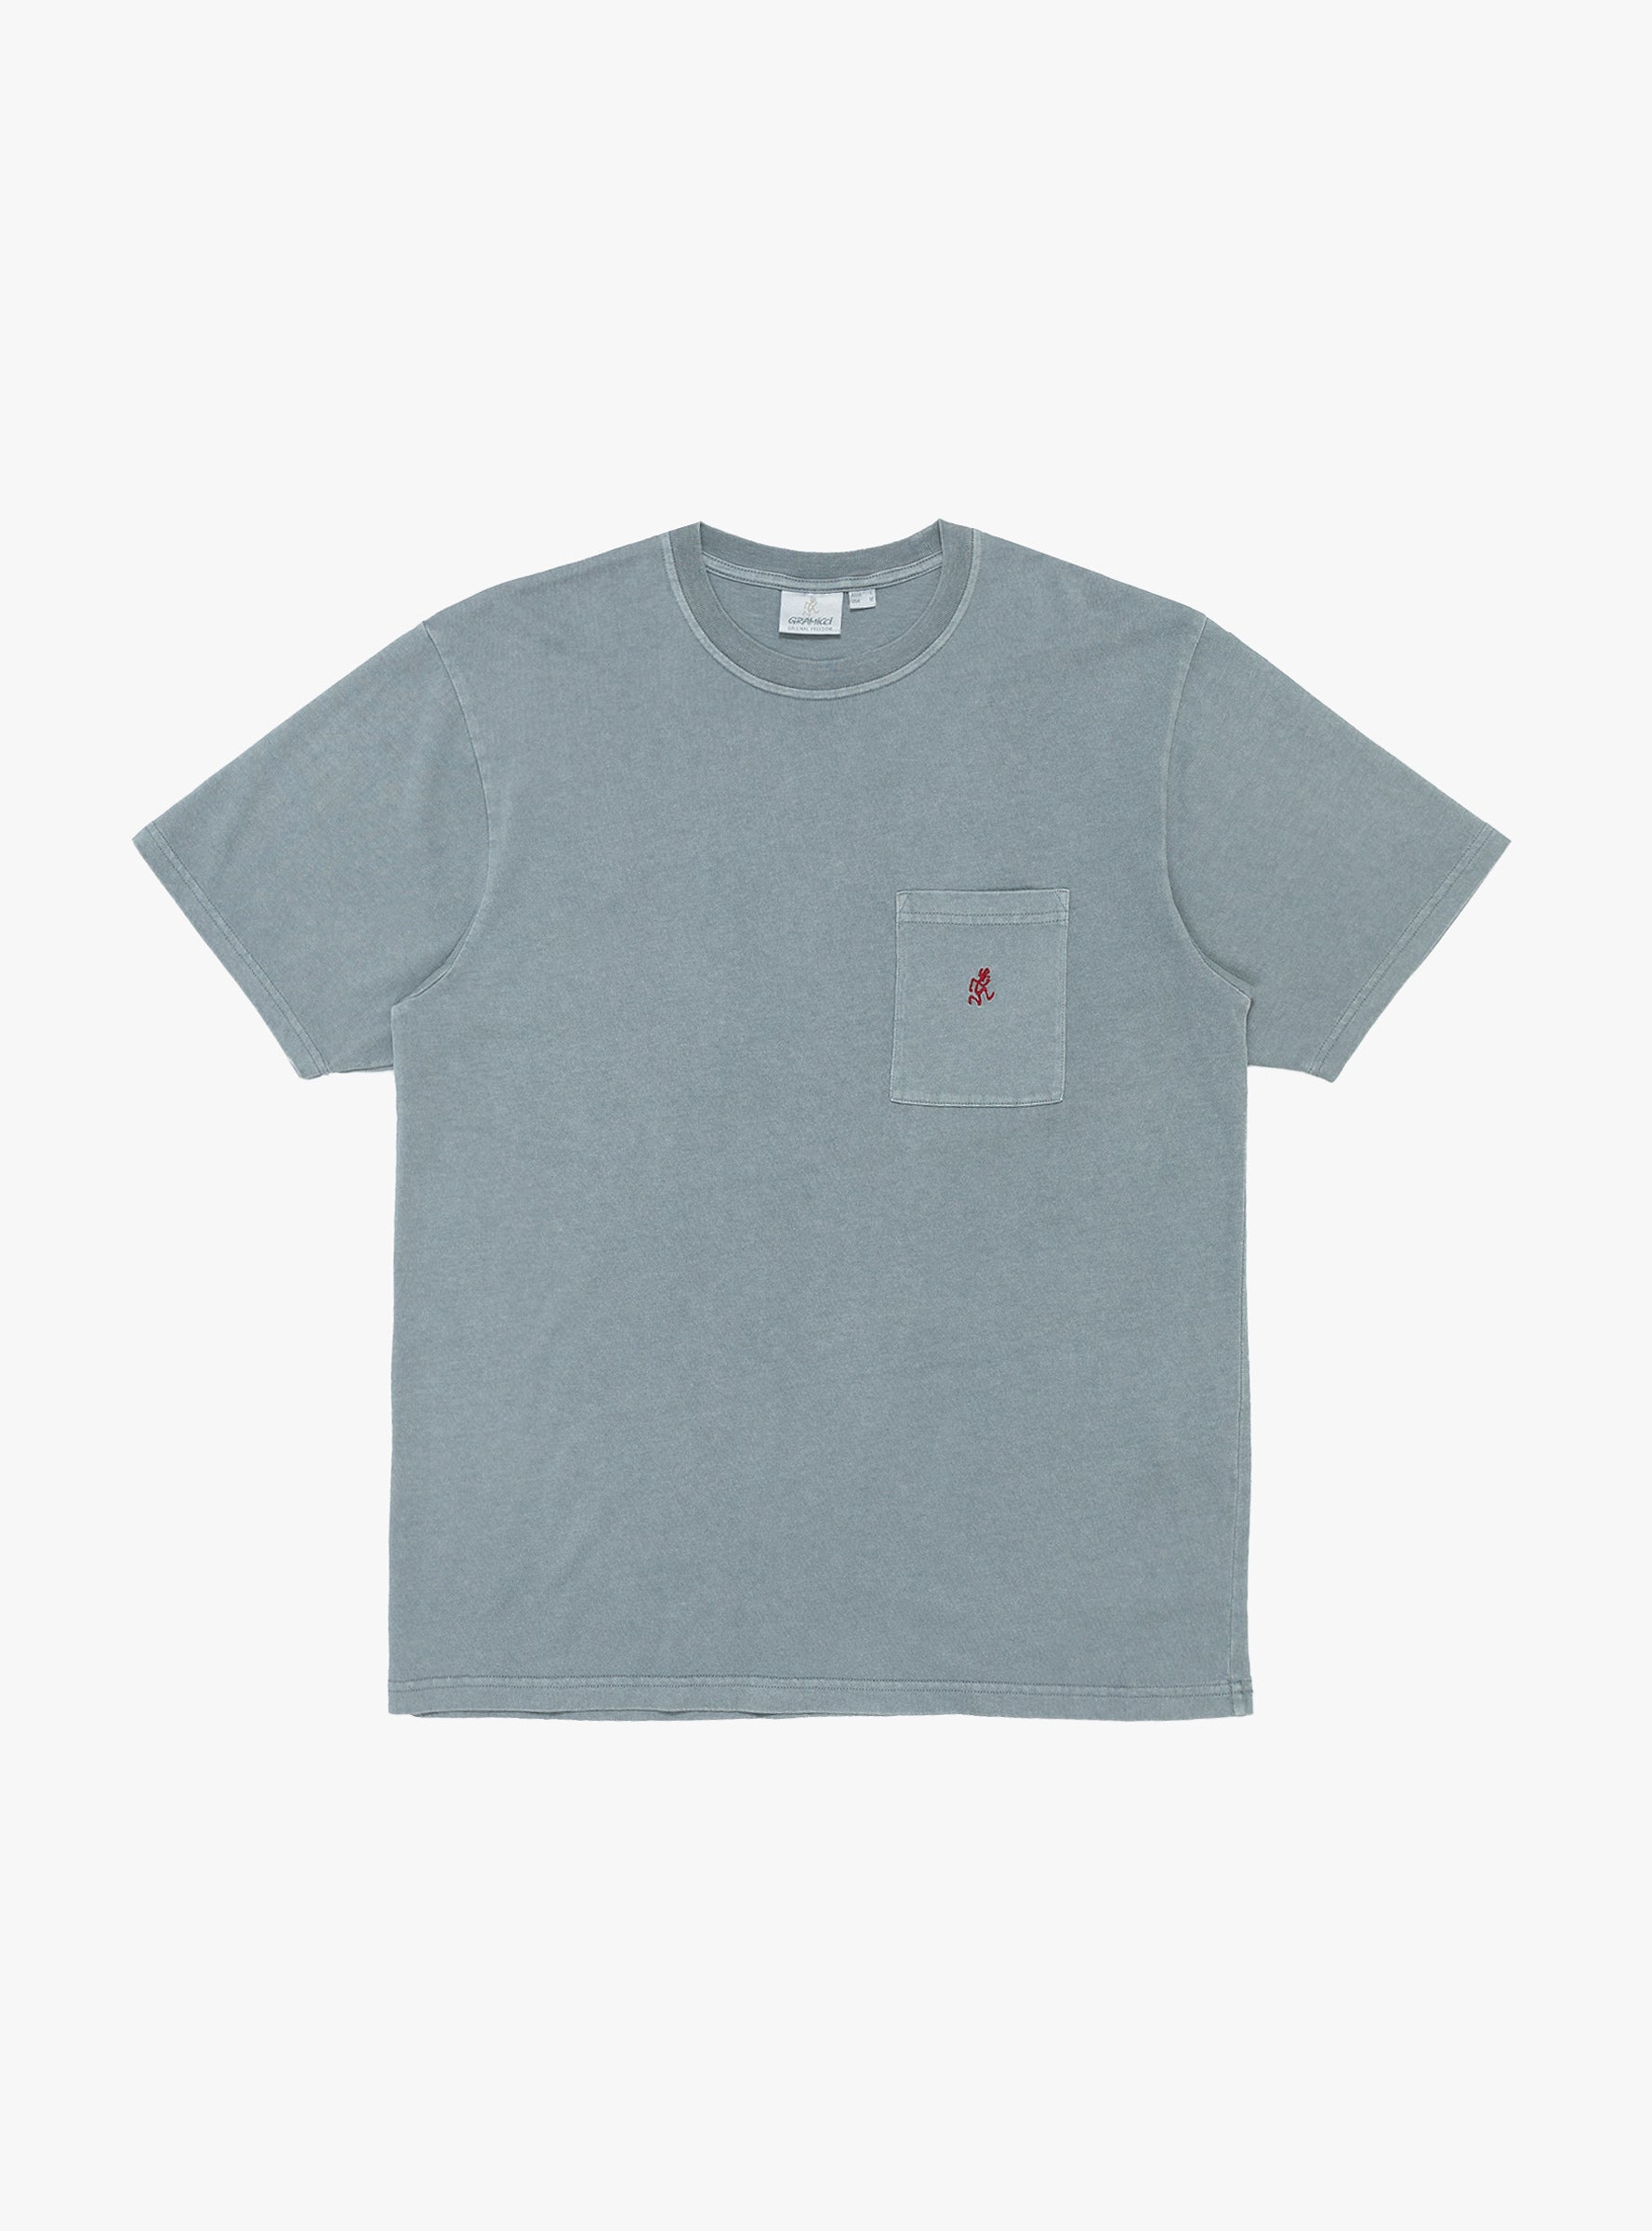 Gramicci Gramicci One Point T-shirt Slate Pigment - Size: Medium